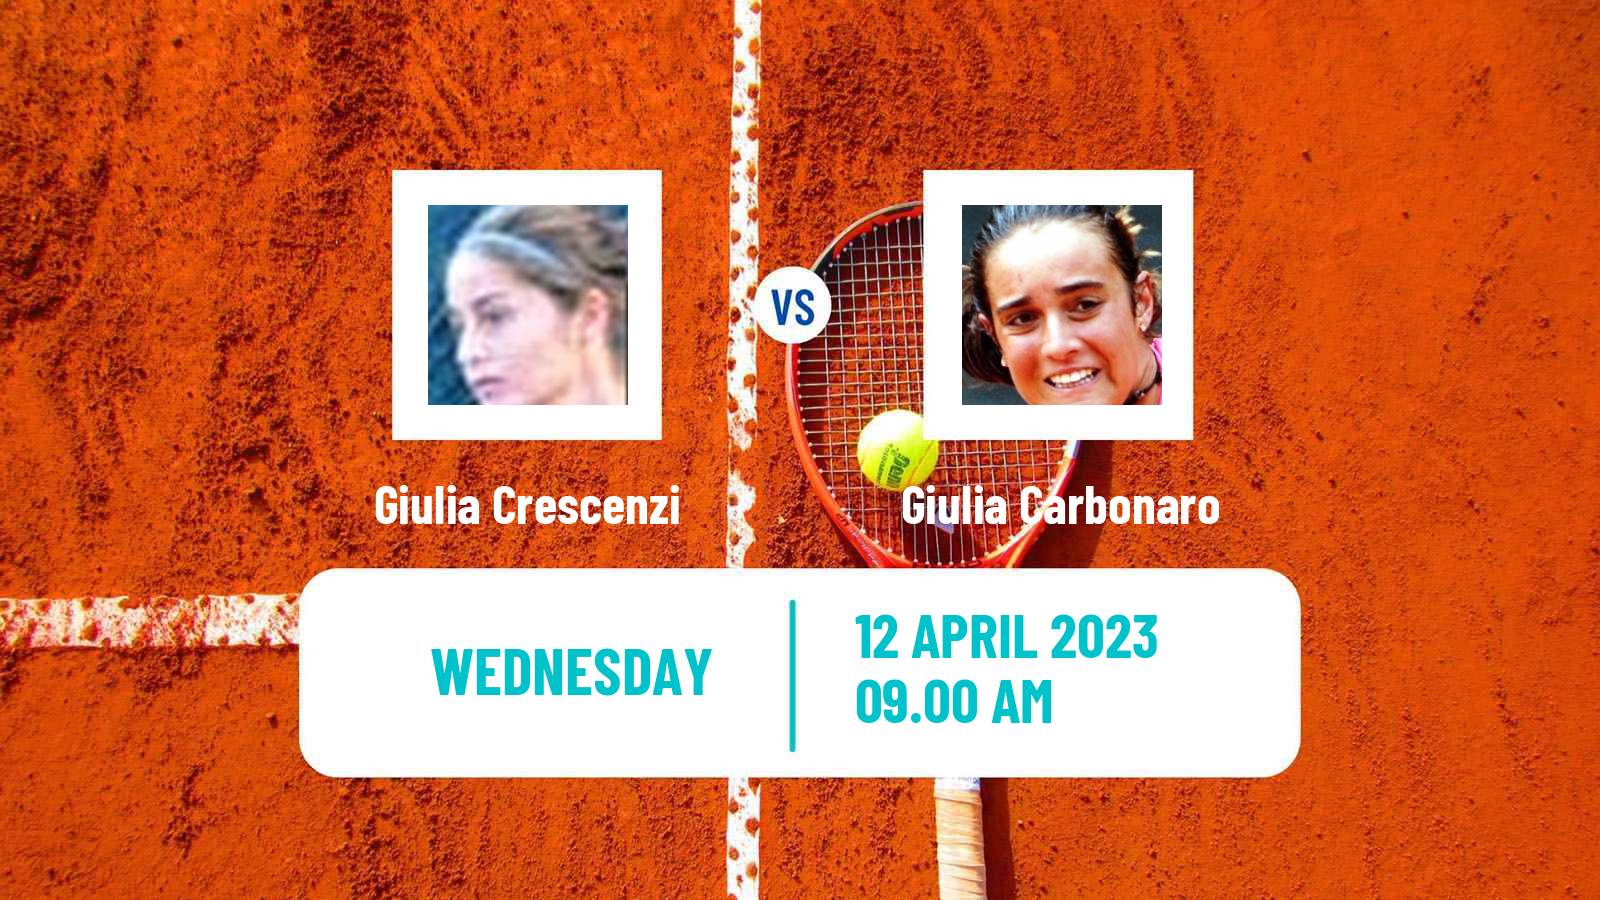 Tennis ITF Tournaments Giulia Crescenzi - Giulia Carbonaro